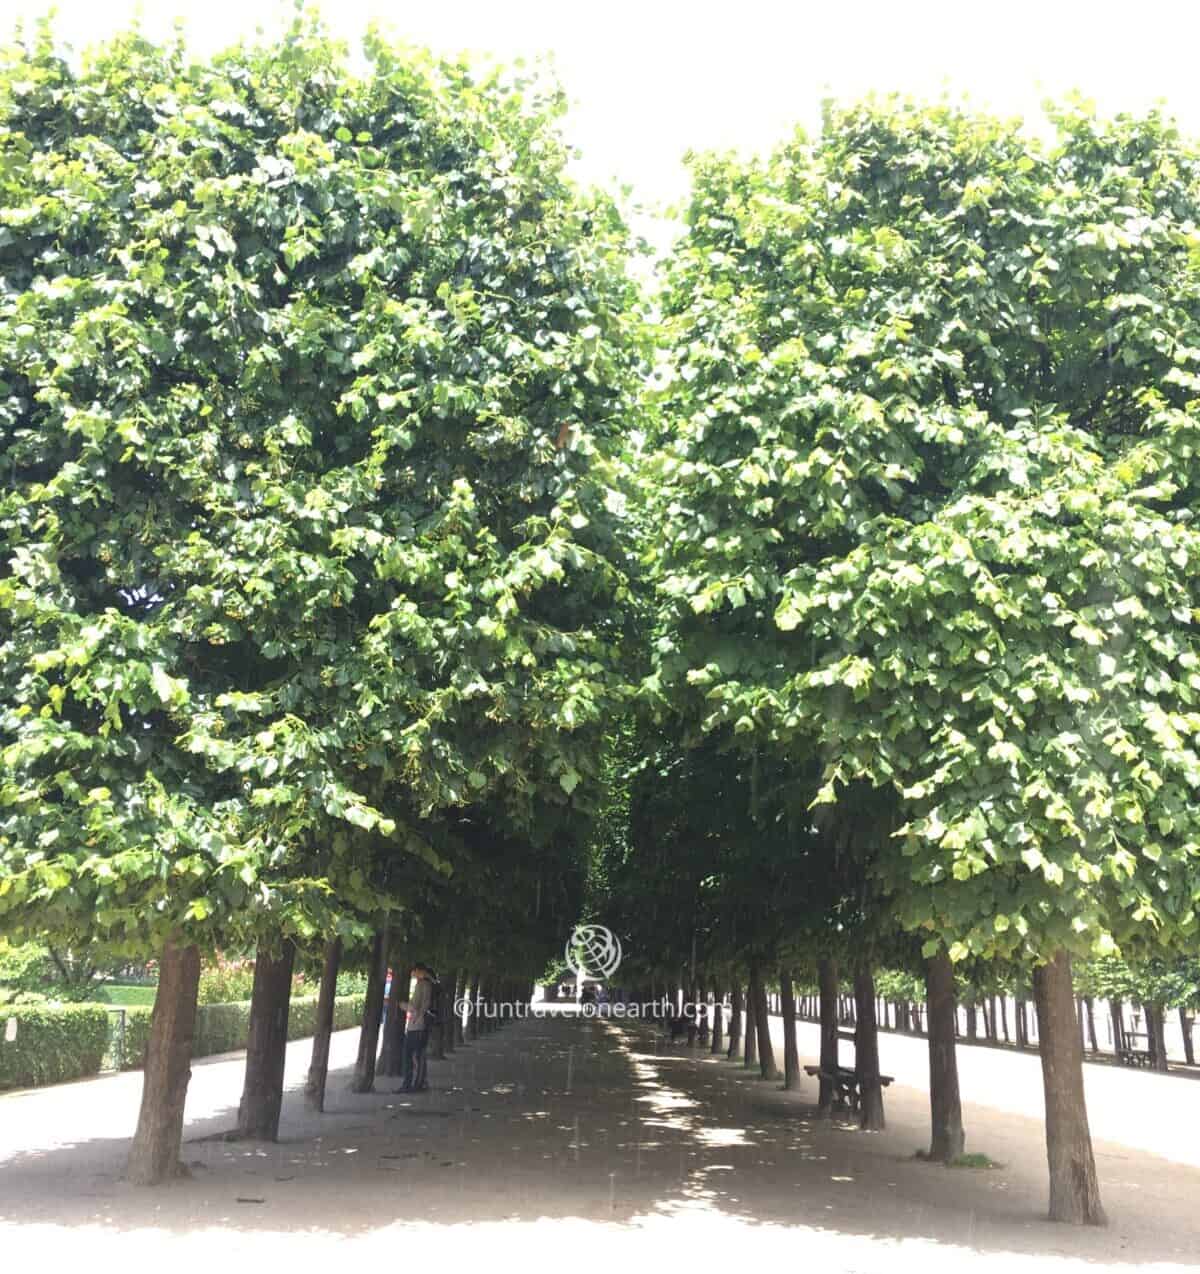 Jardin du Palais Royal パレ・ロワイヤル庭園, Paris, France